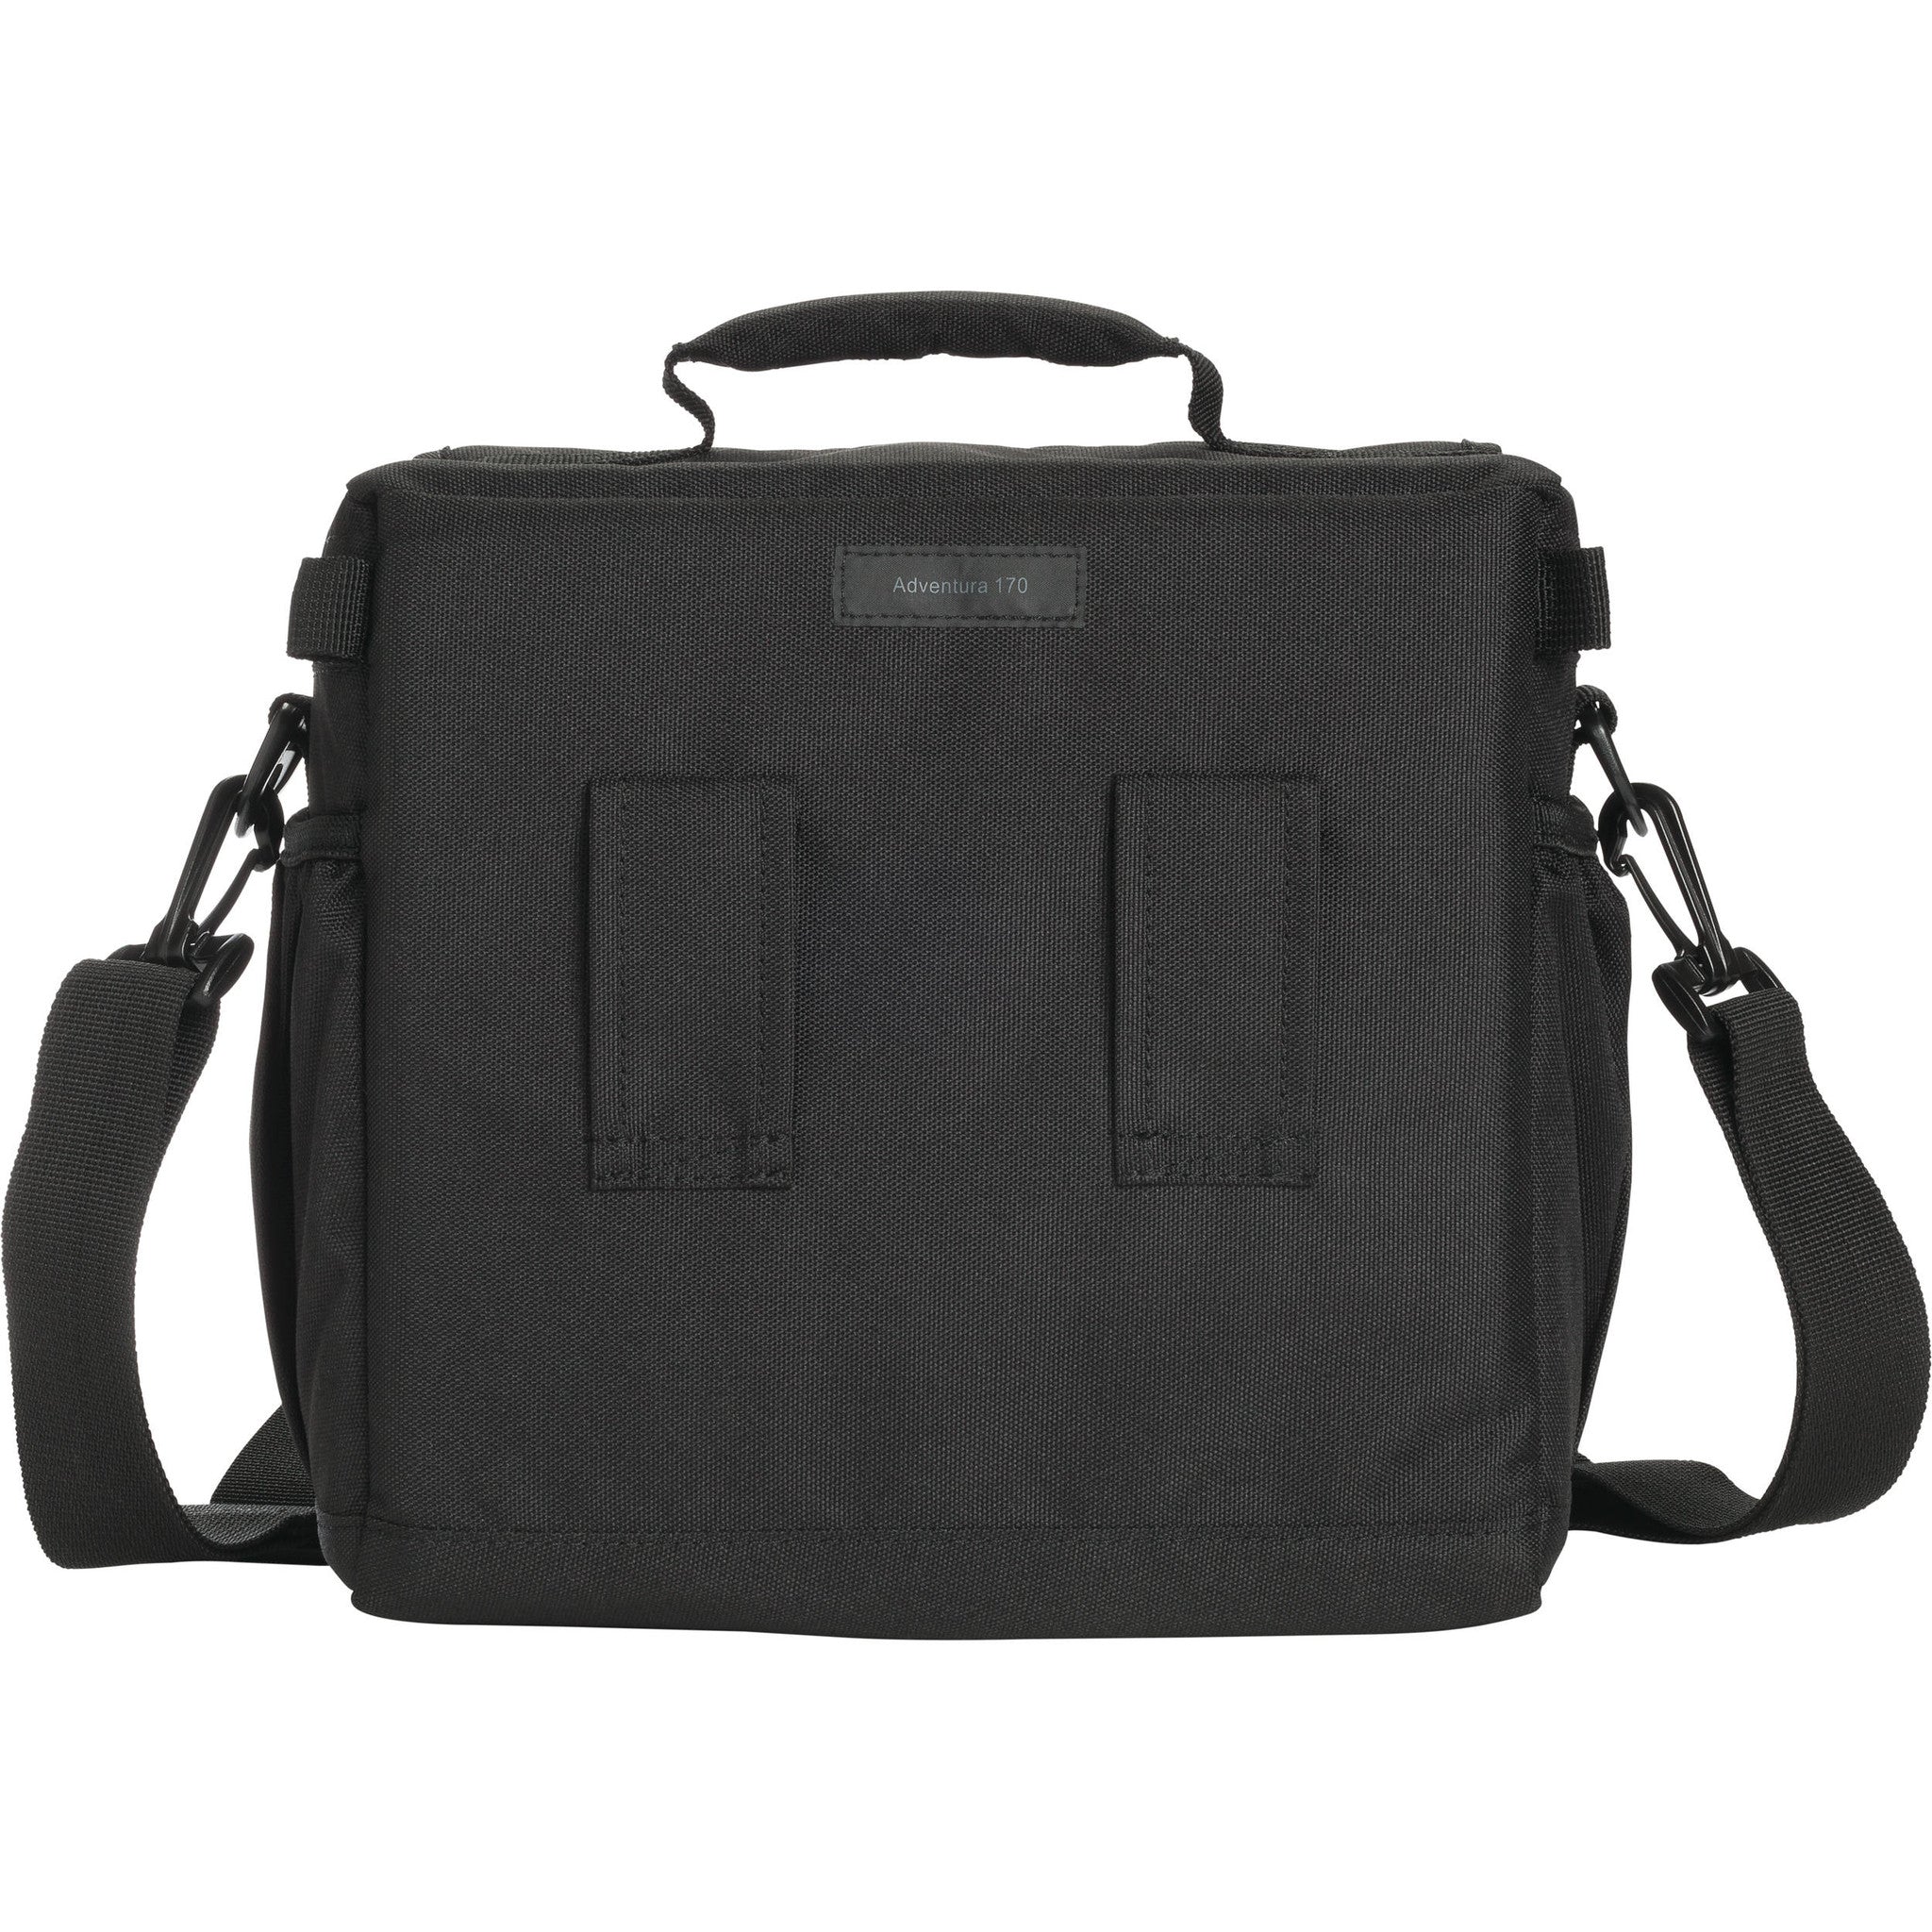 Lowepro Adventura 170 (Black), bags shoulder bags, Lowepro - Pictureline  - 5